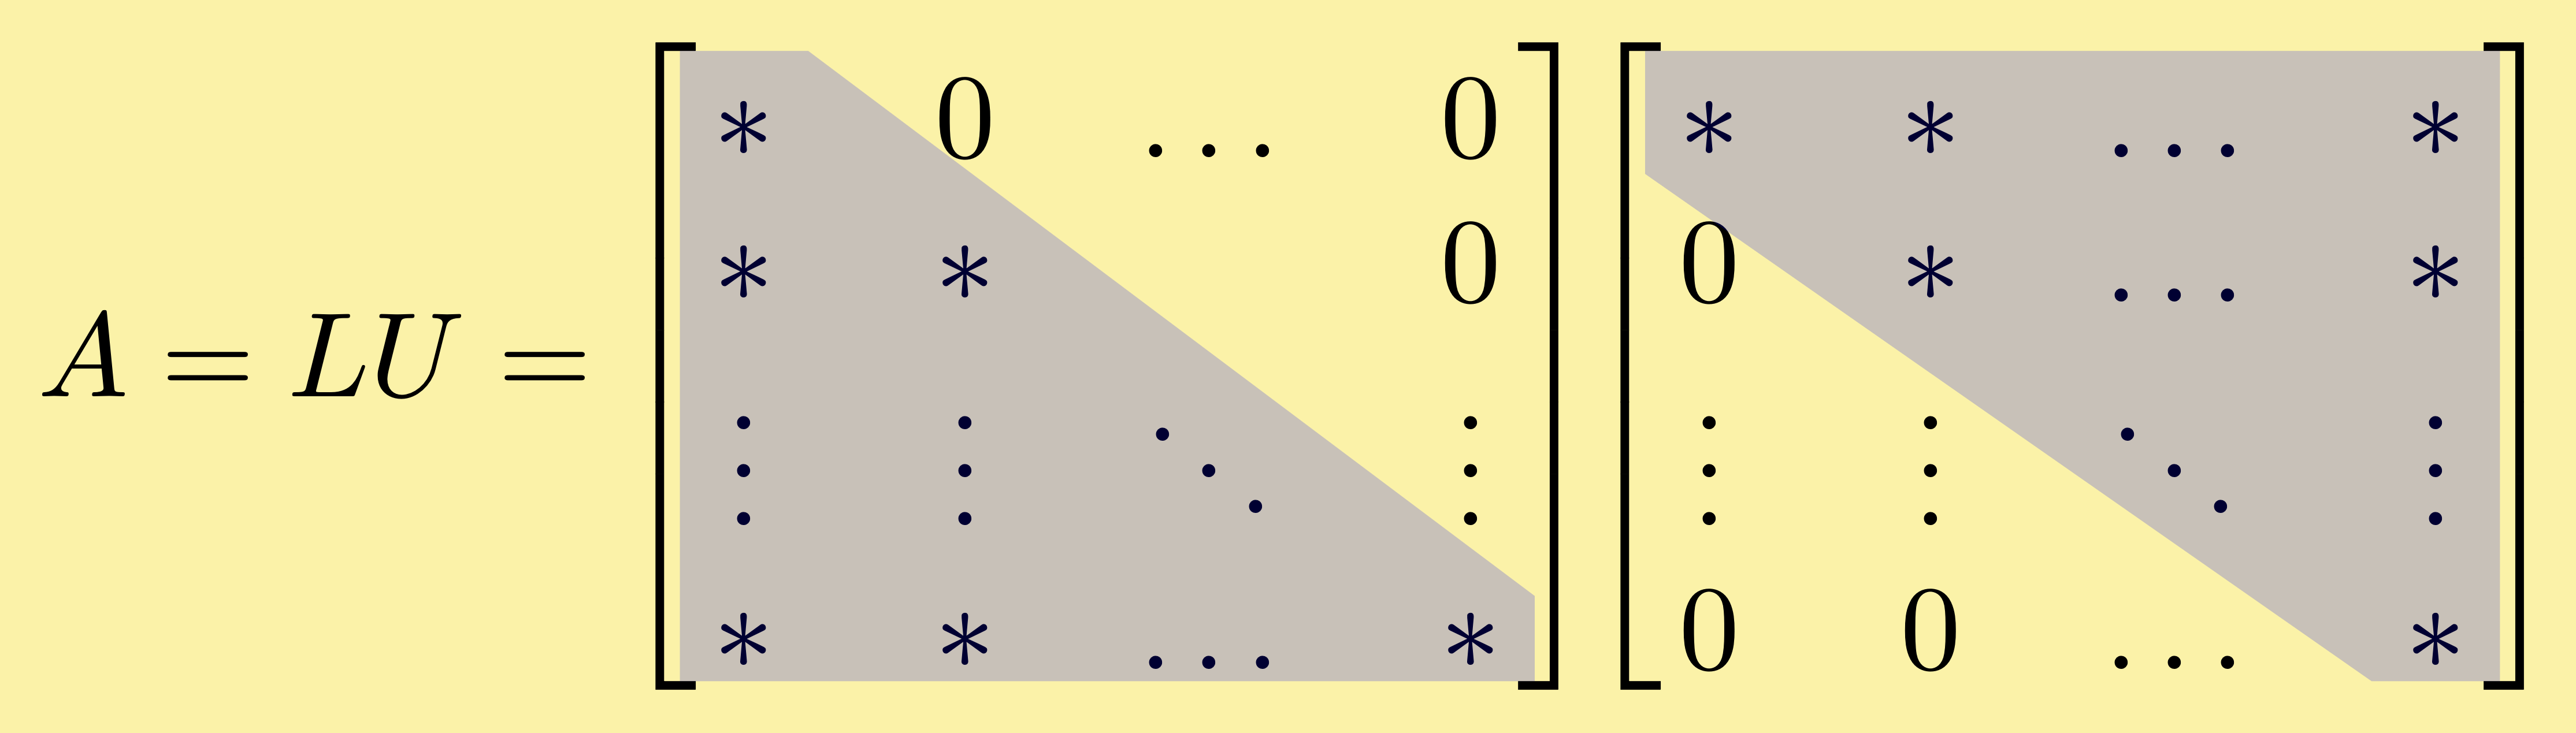 linear algebra LU factorization of matrix